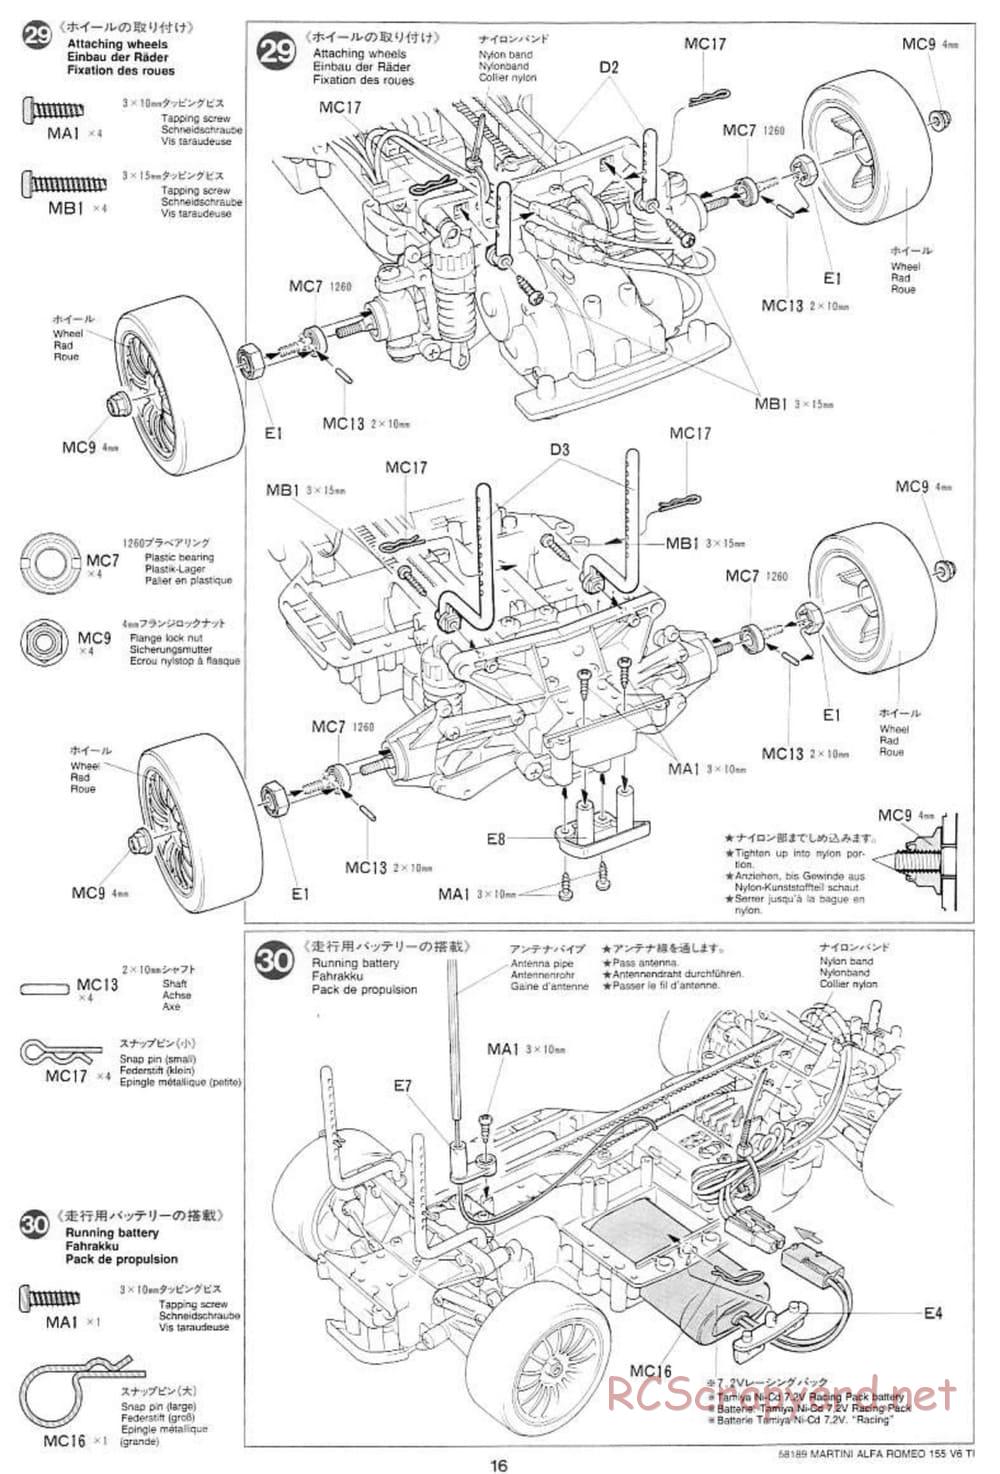 Tamiya - Martini Alfa Romeo 155 V6 TI - TA-03F Chassis - Manual - Page 16